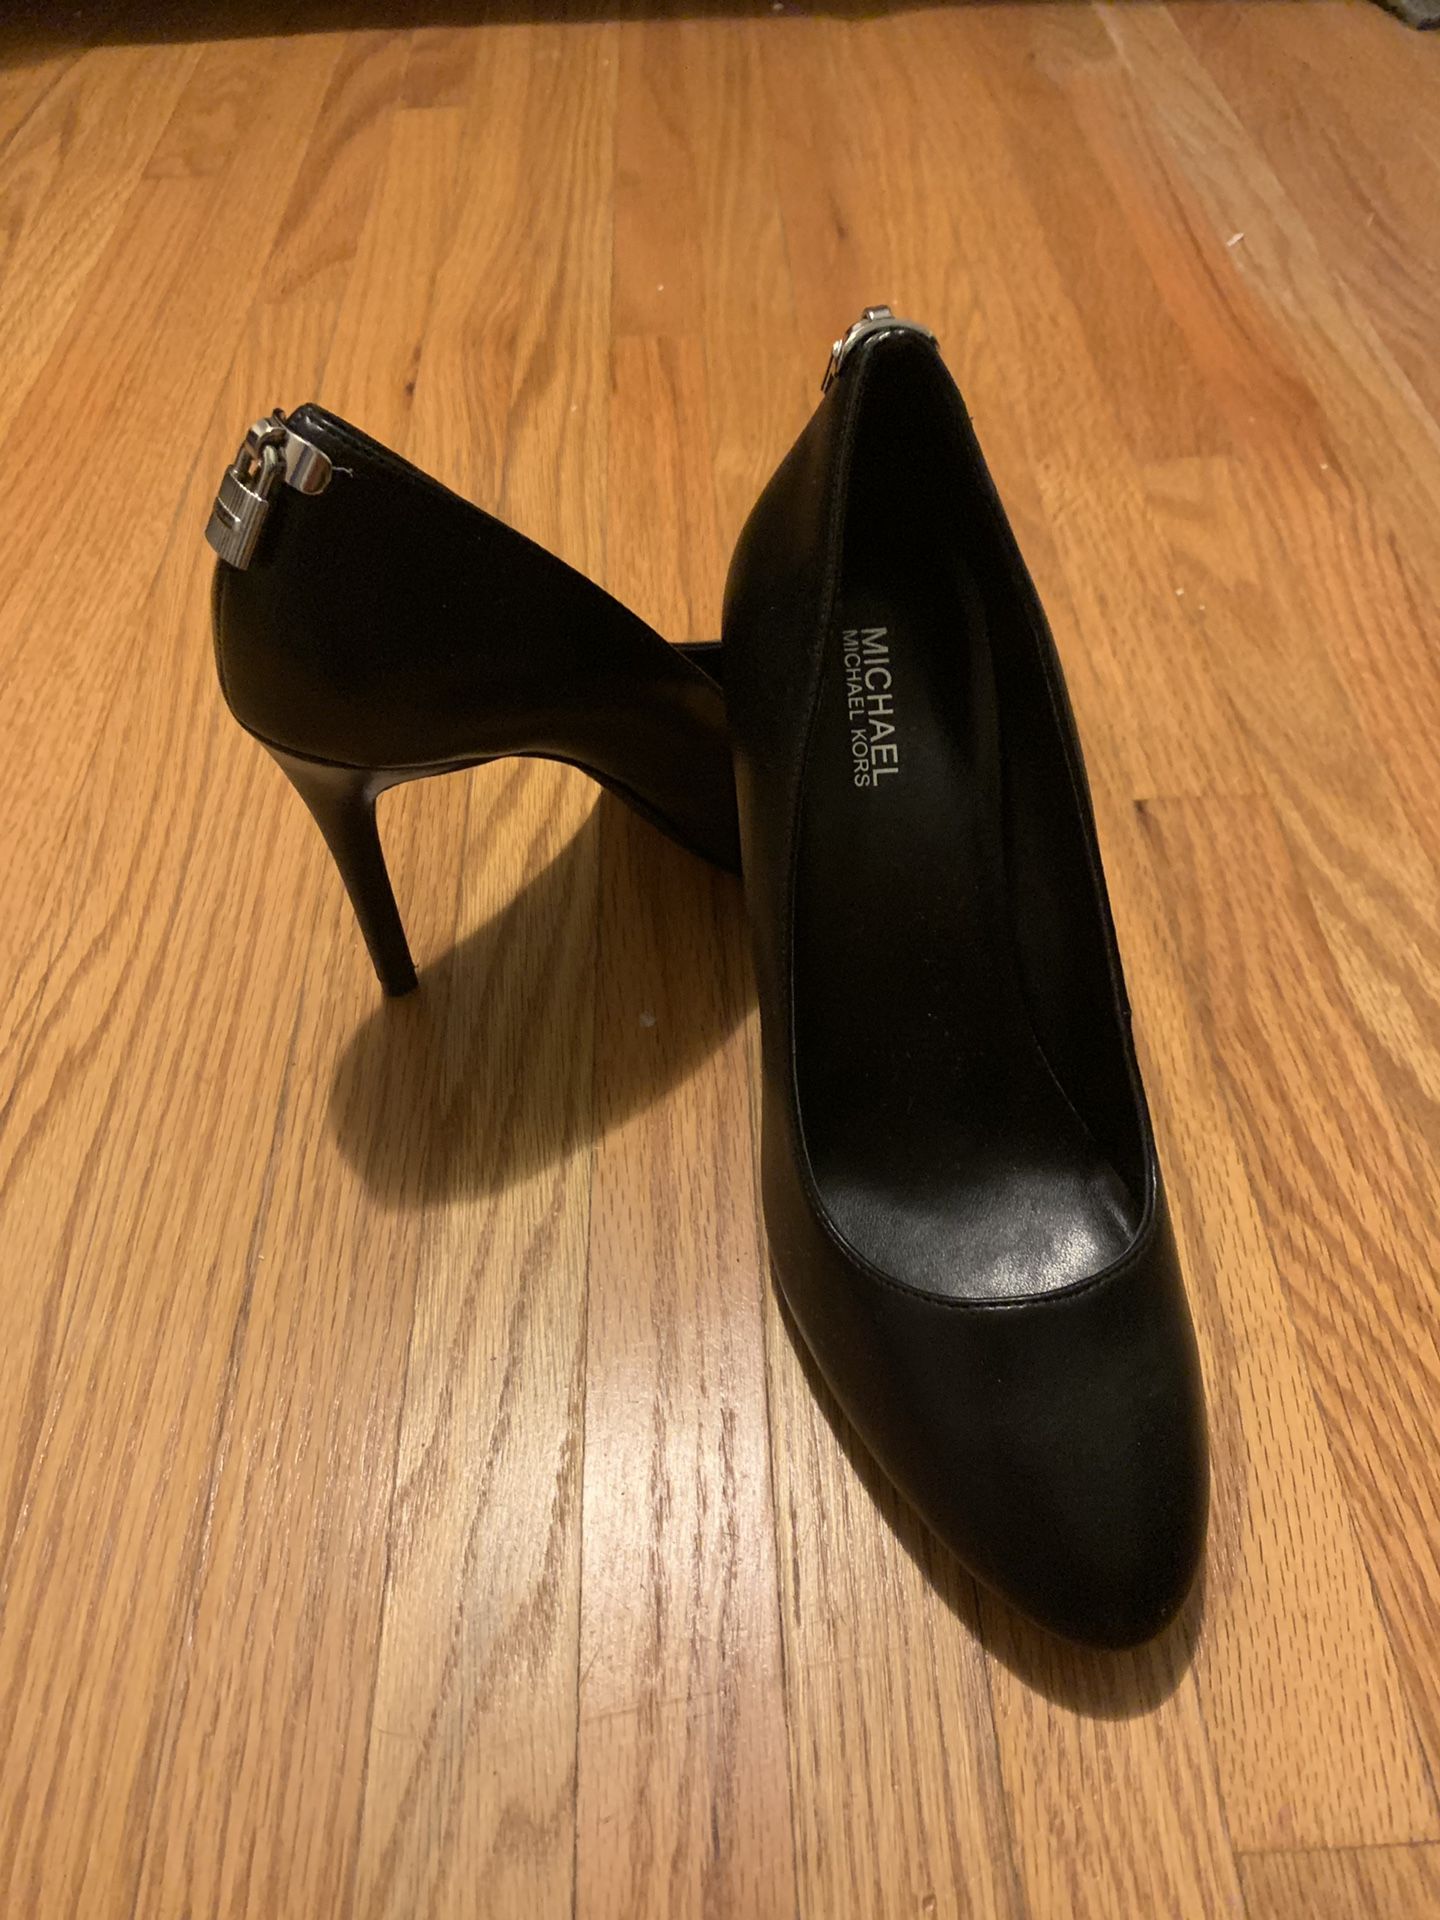 Michael Kors heels/ like new. Worn once